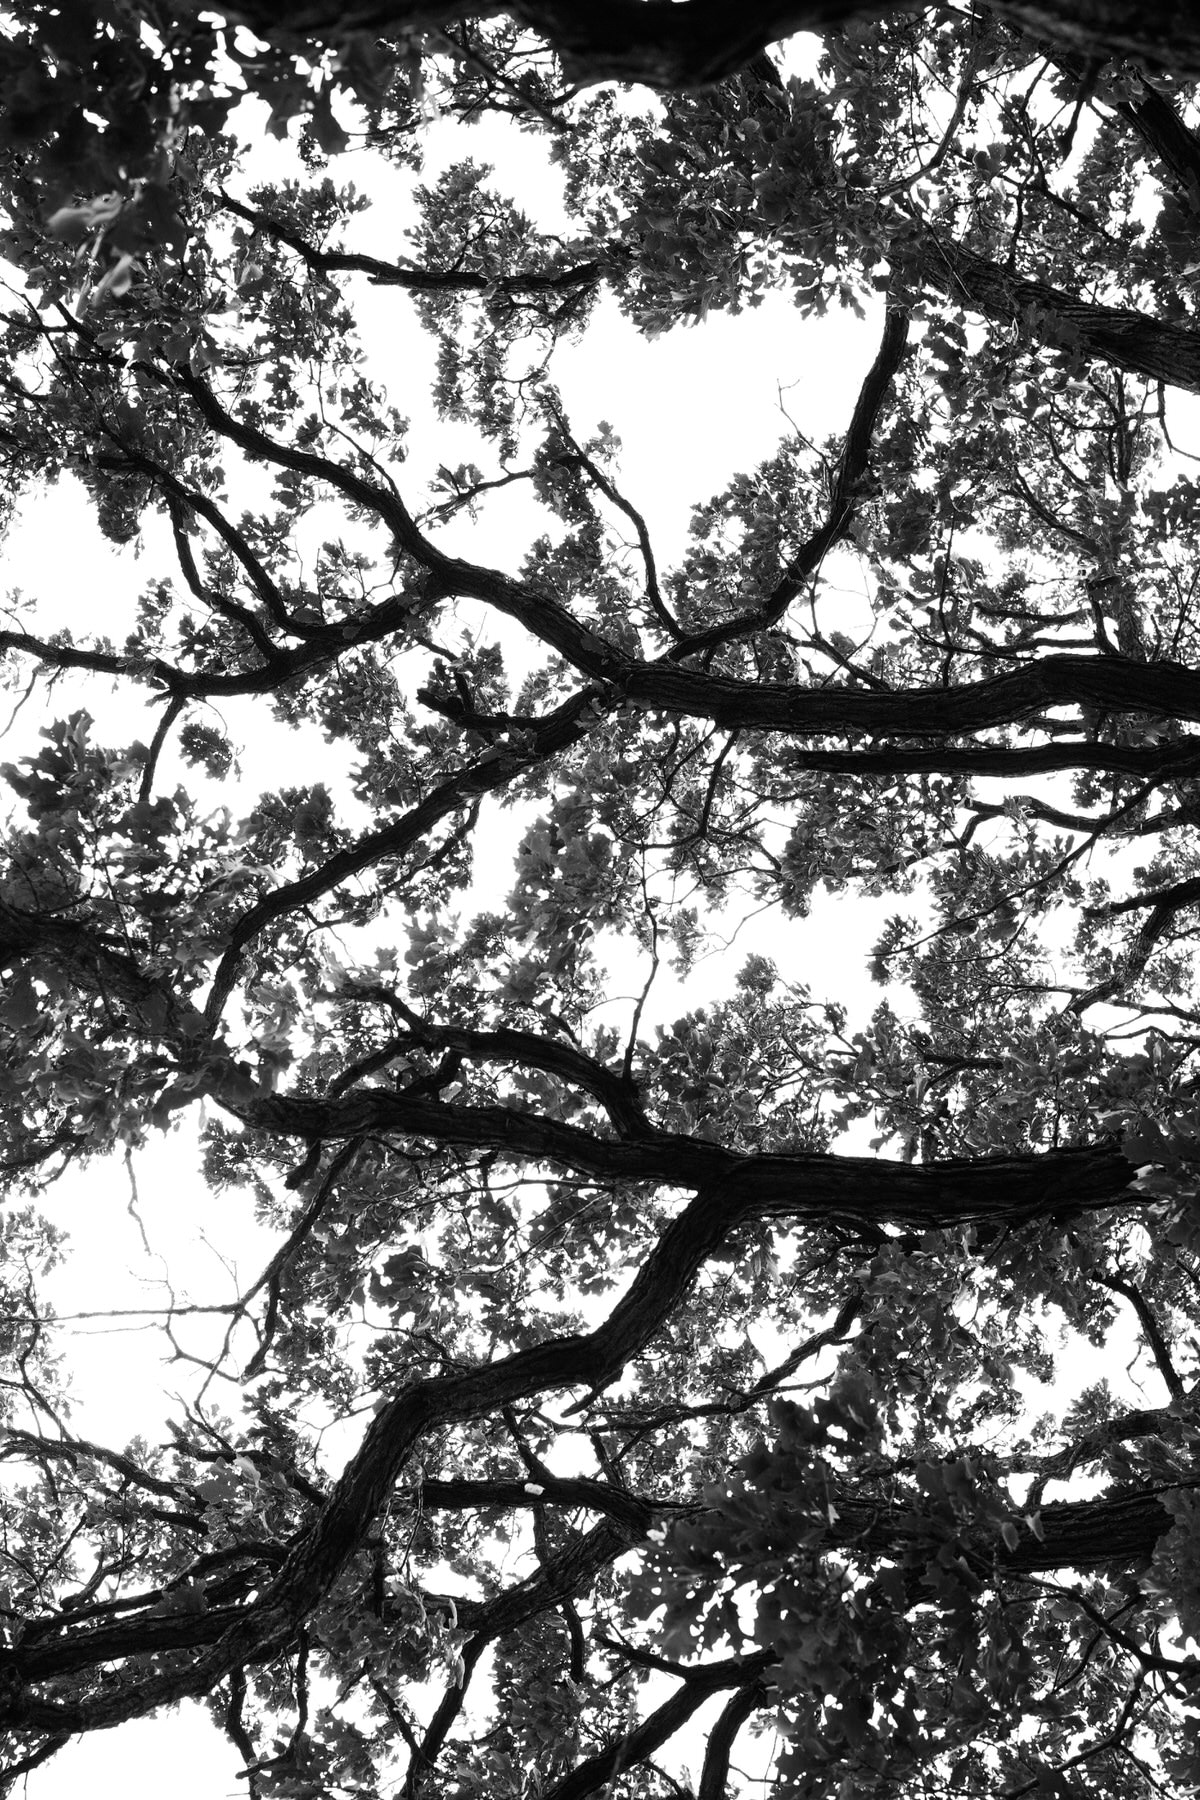 Oak-Tree-Fond-du-Lac-Wisconsin-black-and-white-fine-art-photography-by-Studio-L-photographer-Laura-Schneider-_12039